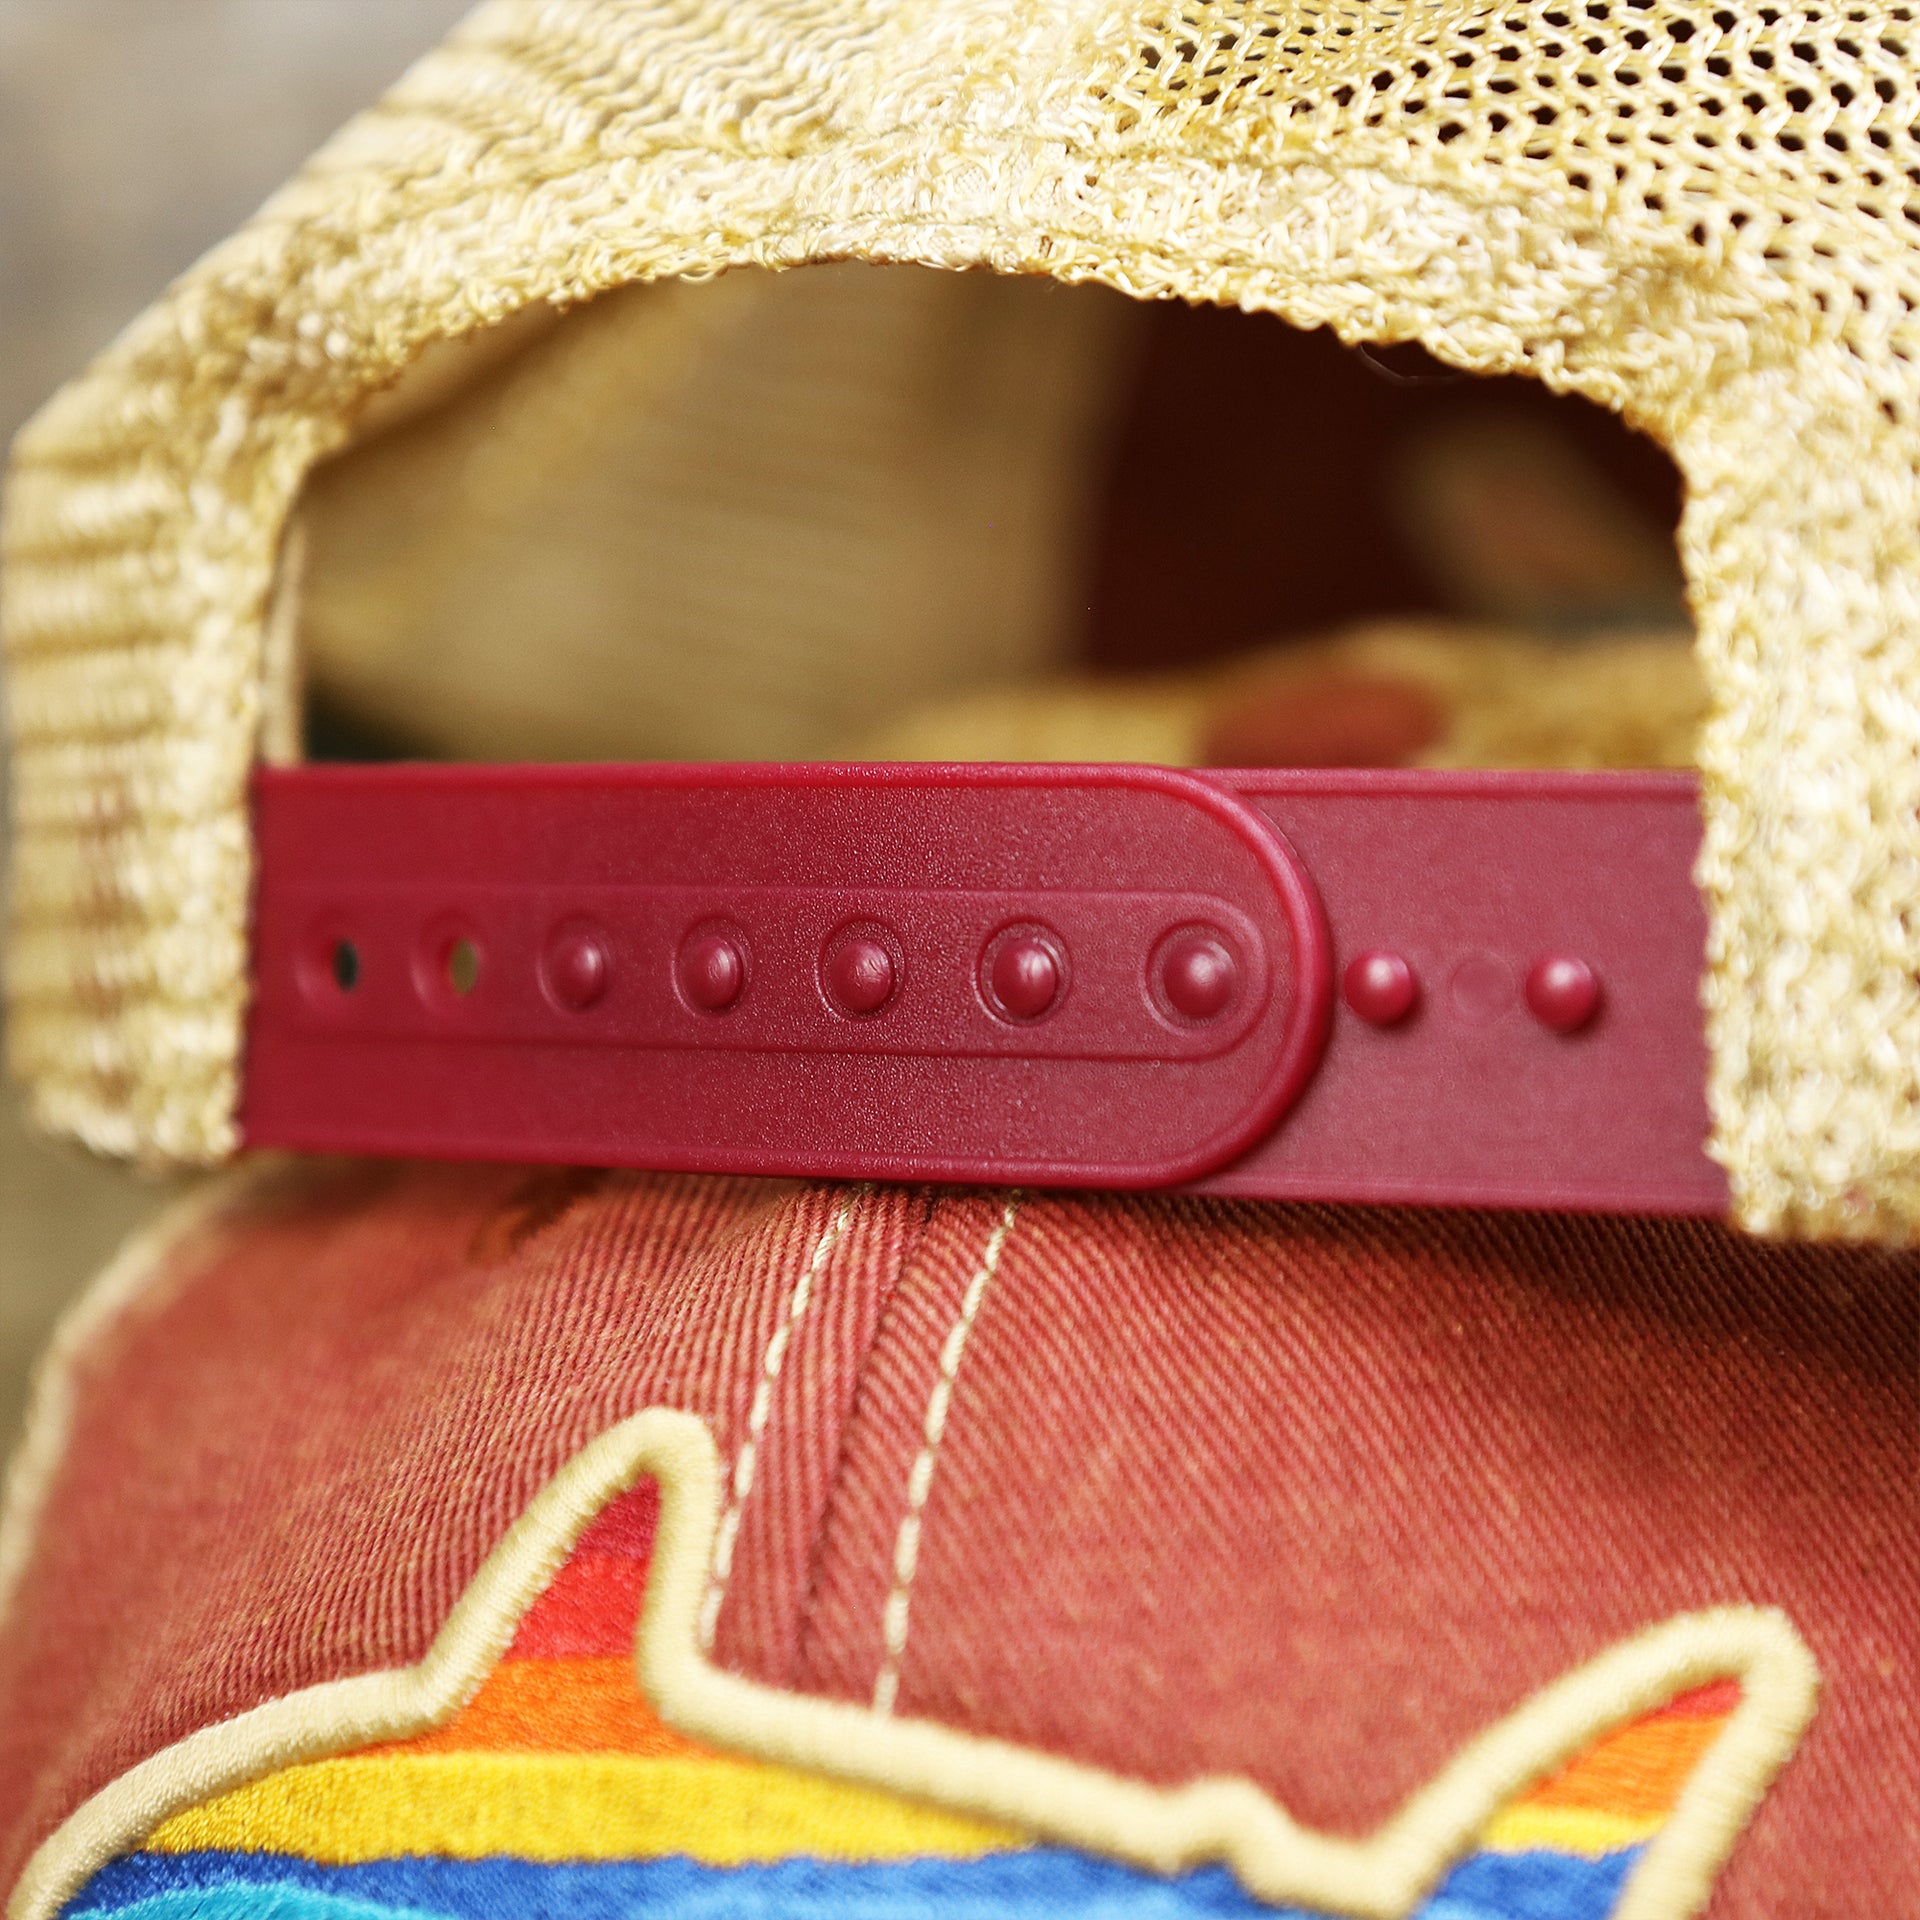 The Red Adjustable Strap on the Ocean City Horizon Shark Vintage Mesh Back Worn Colorway Trucker Hat | Cardinal Trucker Hat